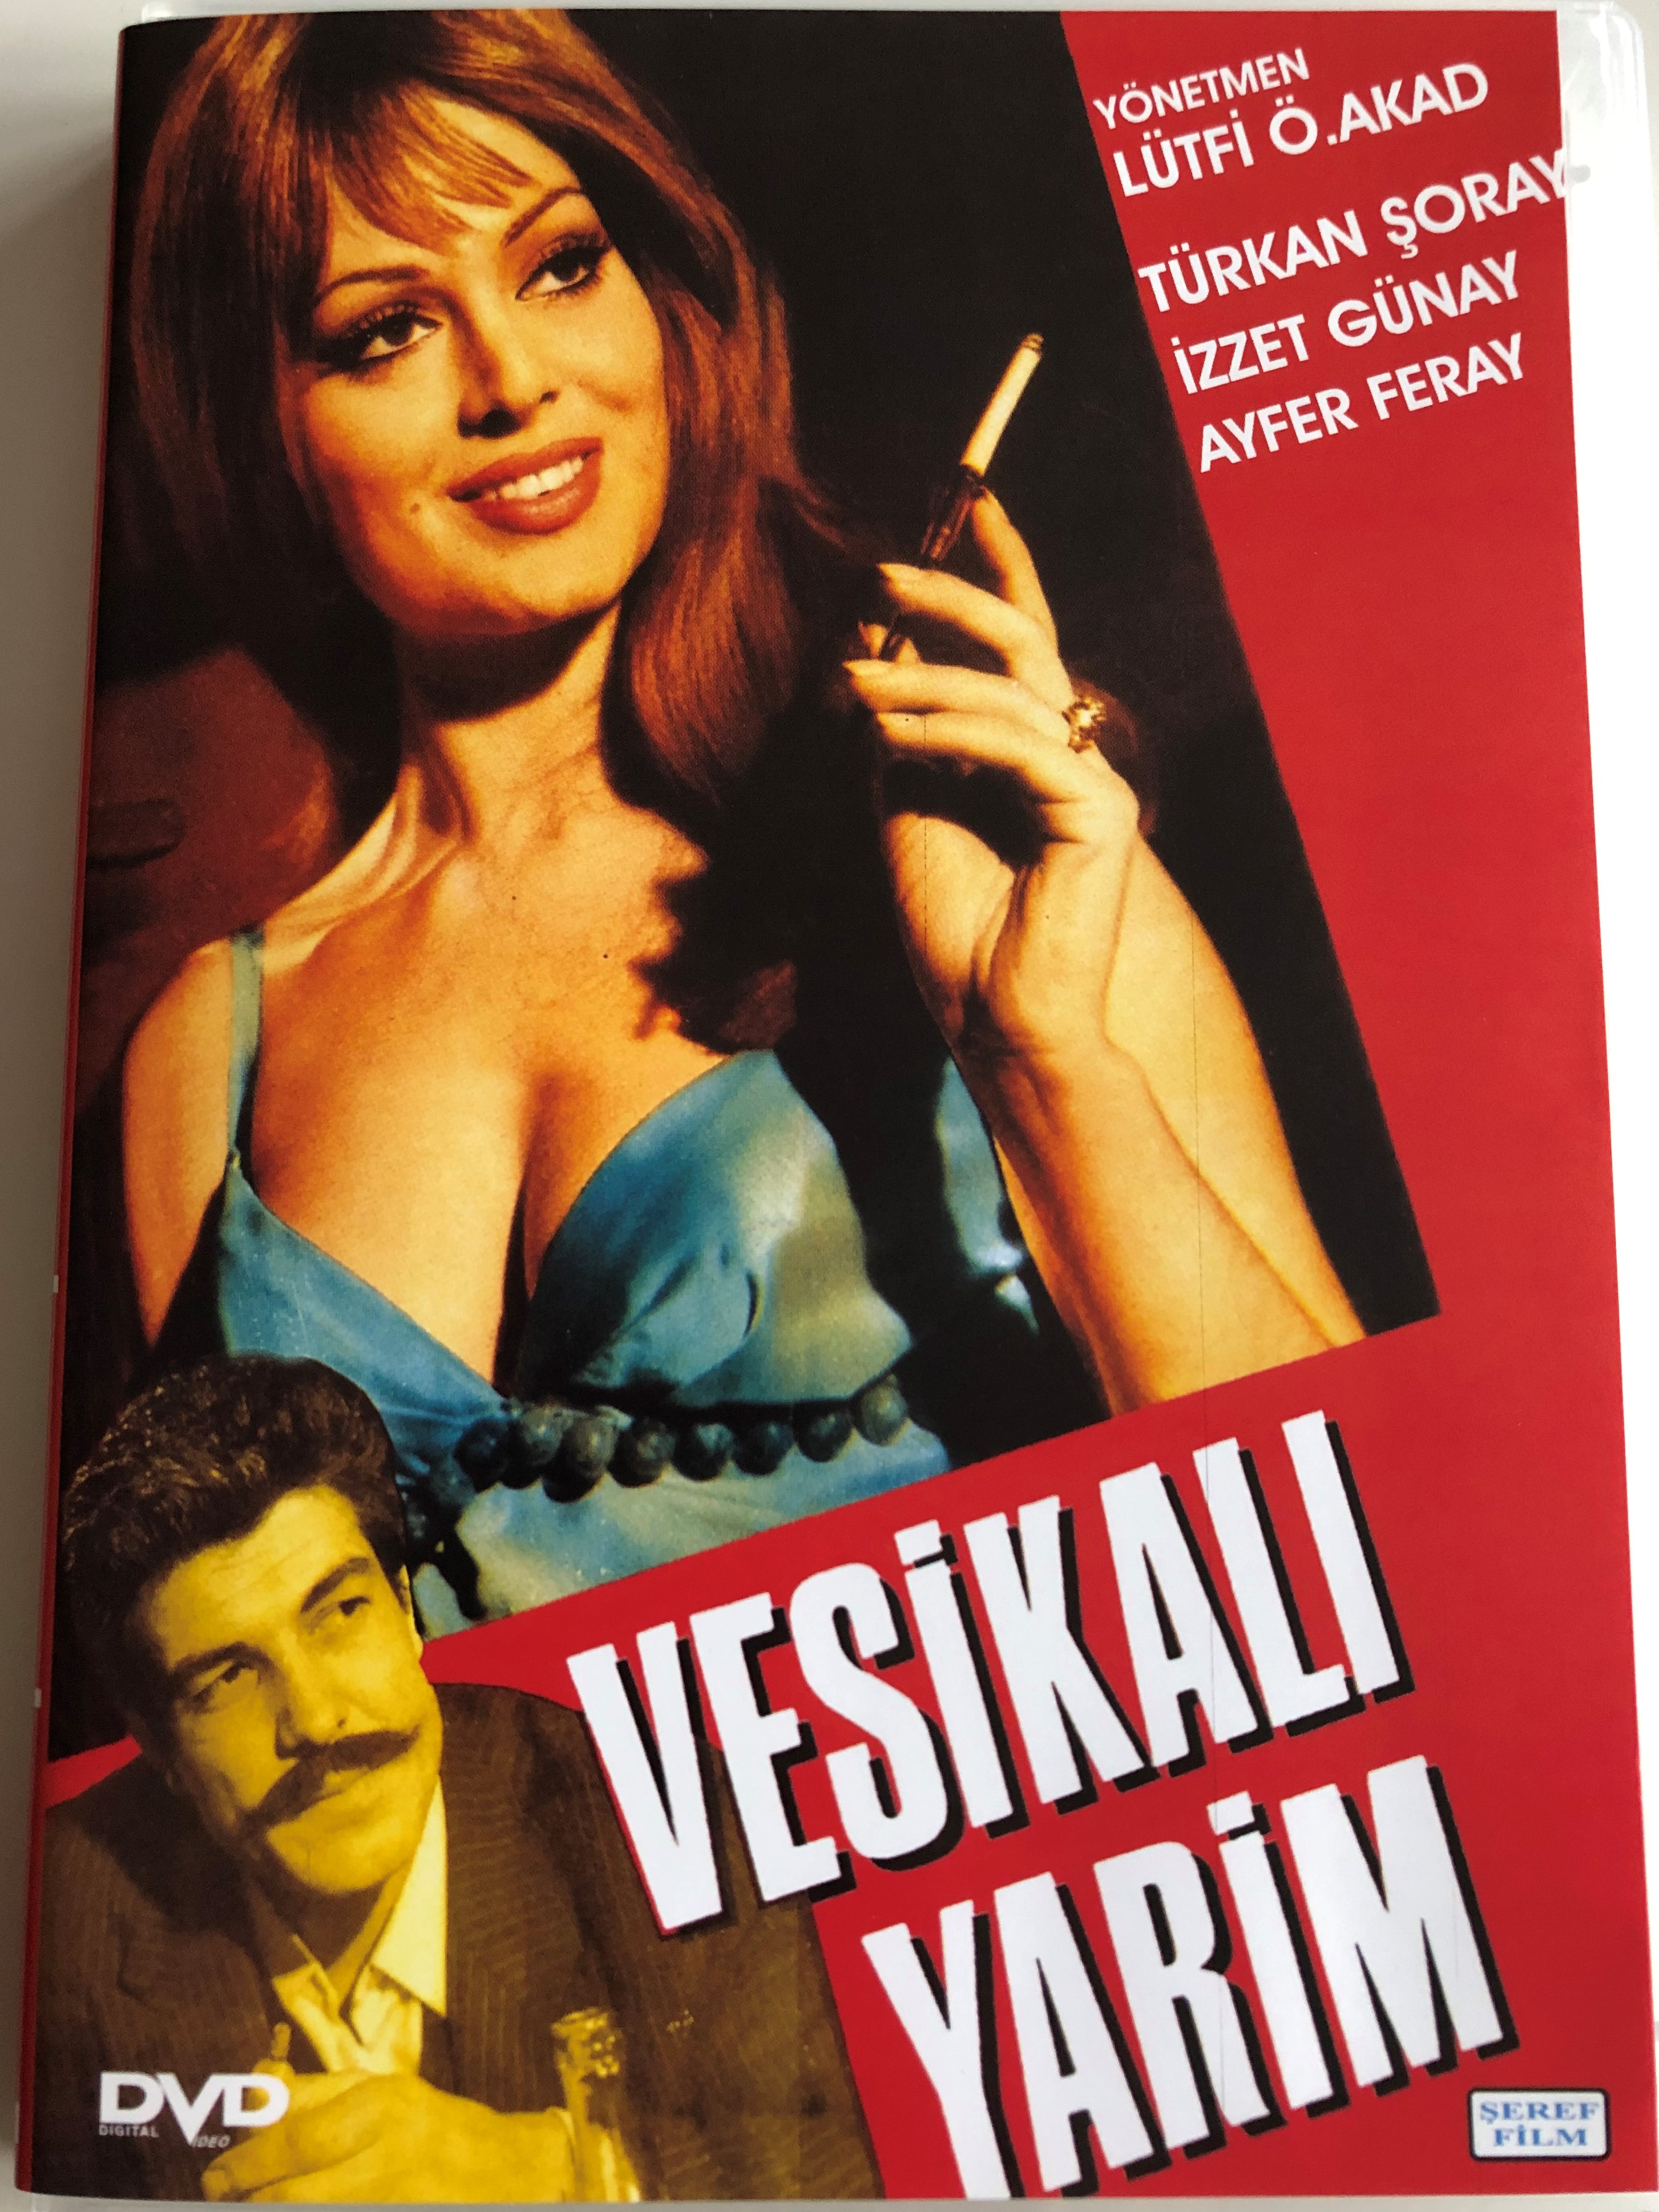 vesikali-yarim-dvd-1968-directed-by-mer-l-tfi-akad-1.jpg